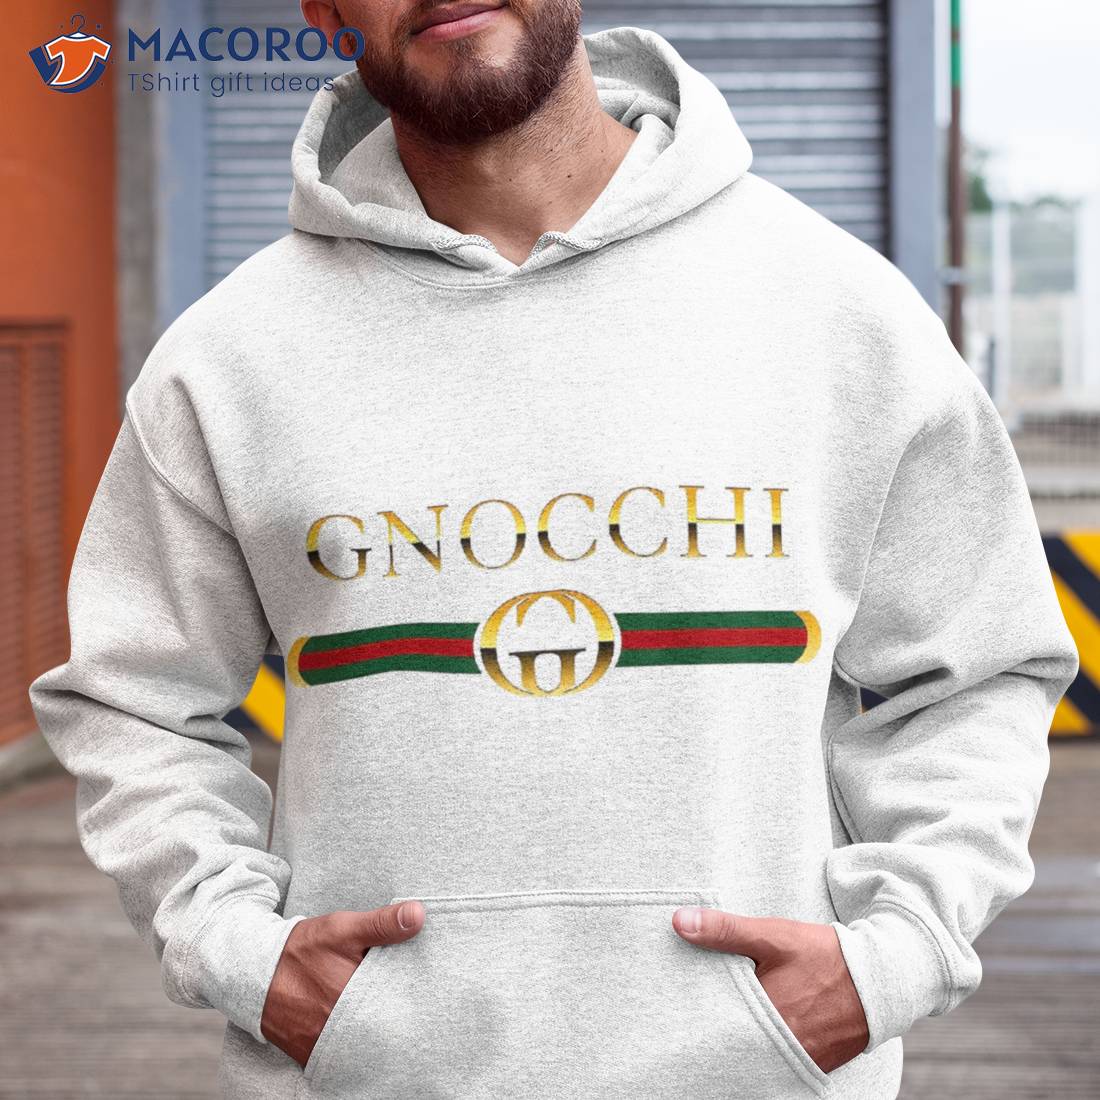 gnocchi shirt gucci, big discount UP TO 55% OFF - rdd.edu.iq